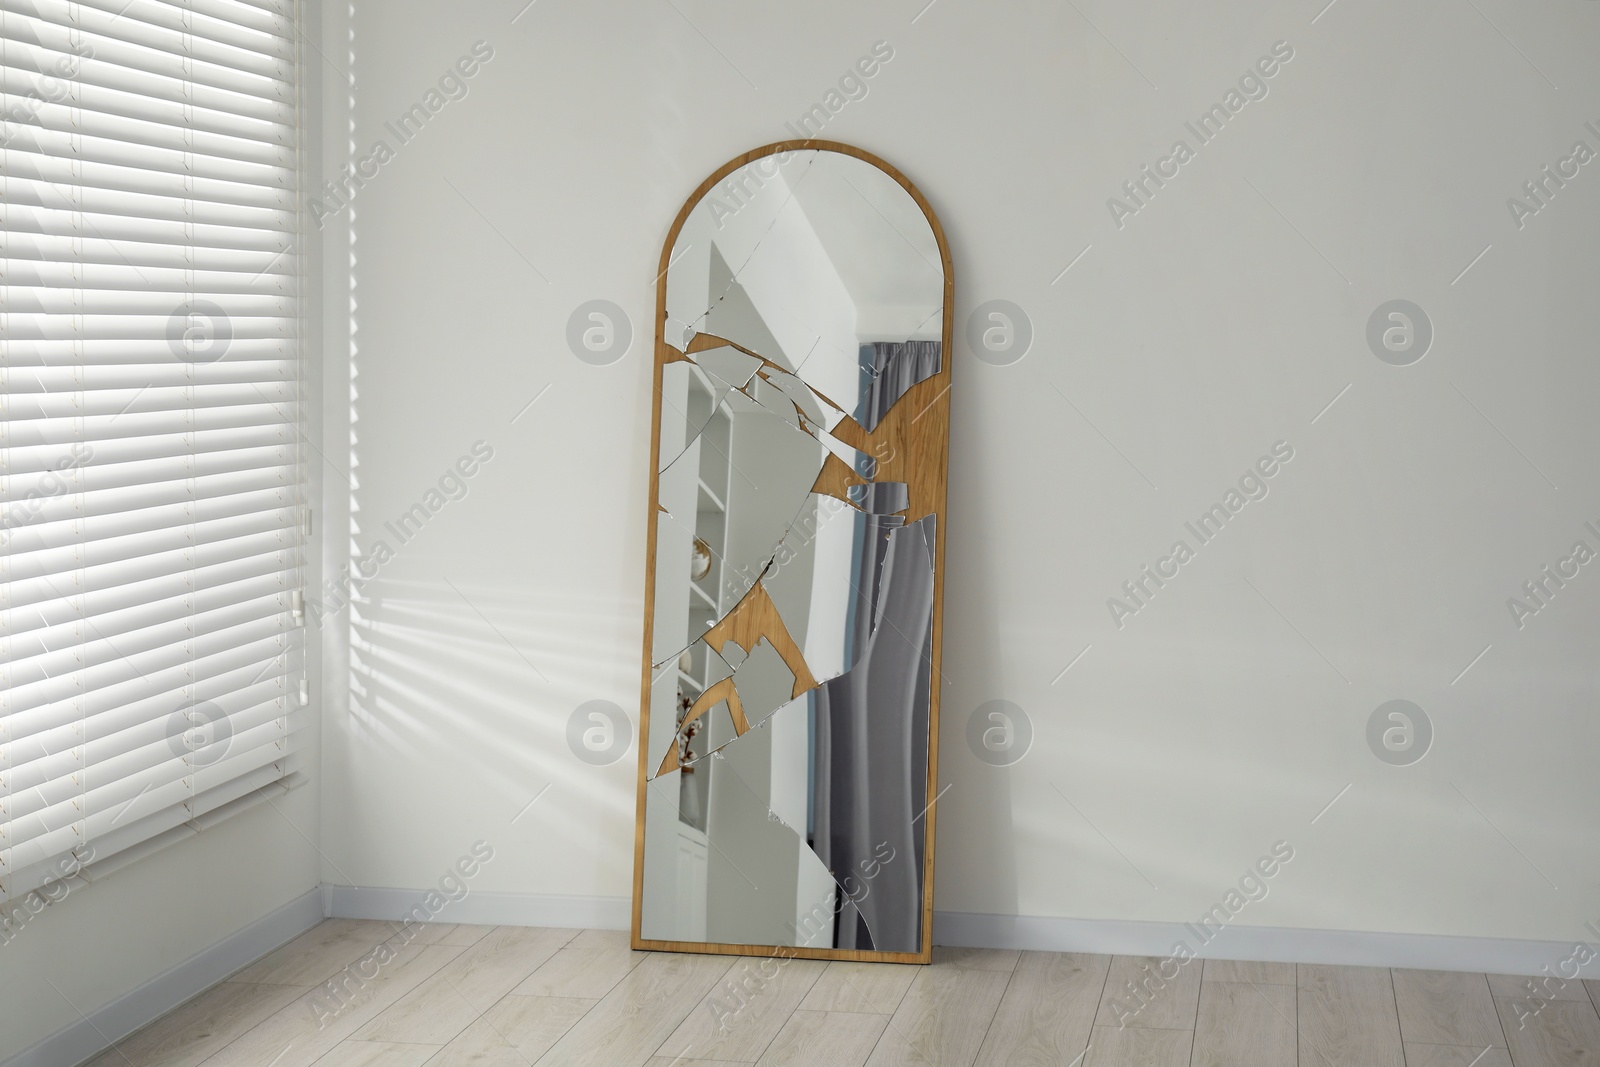 Photo of Broken mirror with many cracks near white wall indoors